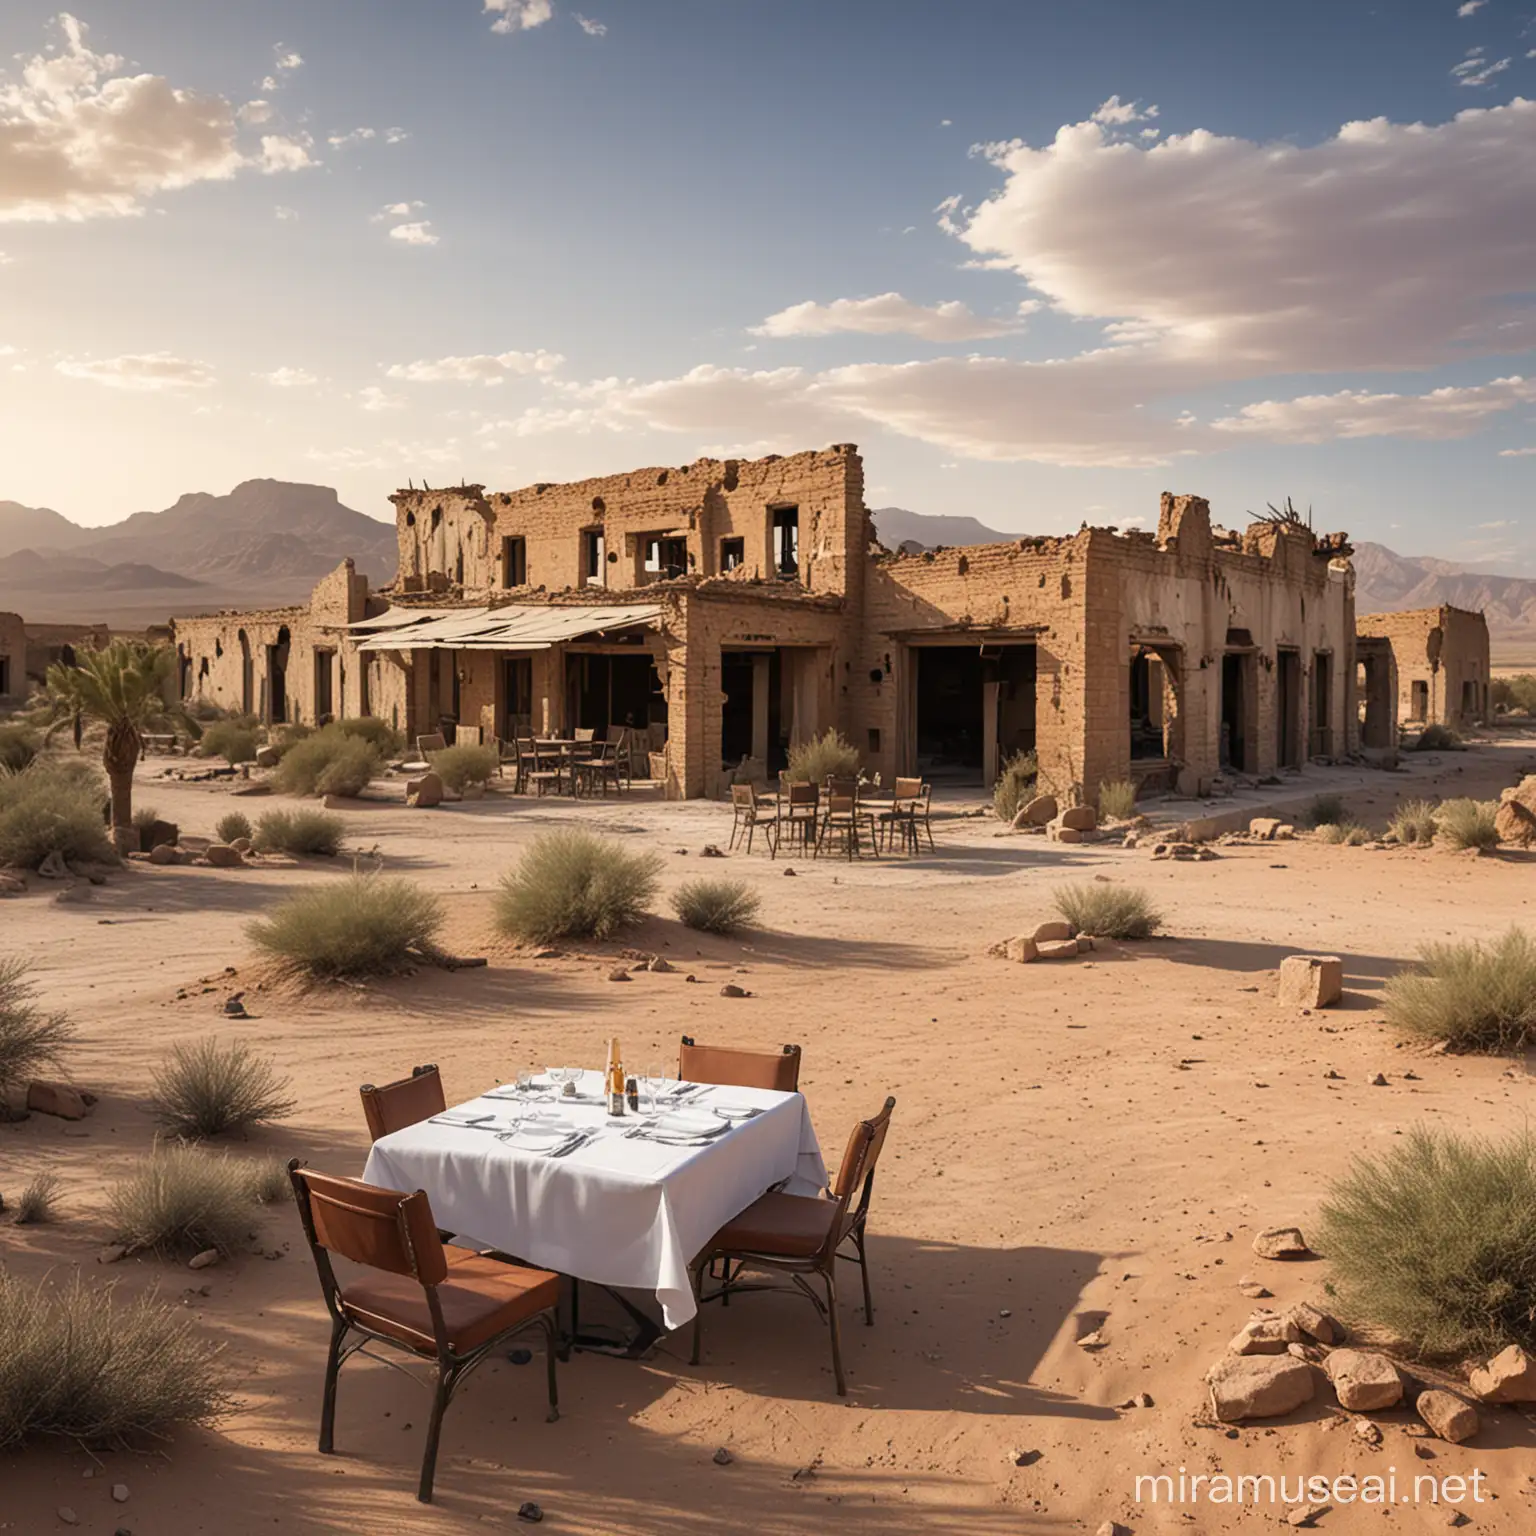 Desert Oasis Ruins Sunkissed Restaurant Amidst Sand Dunes